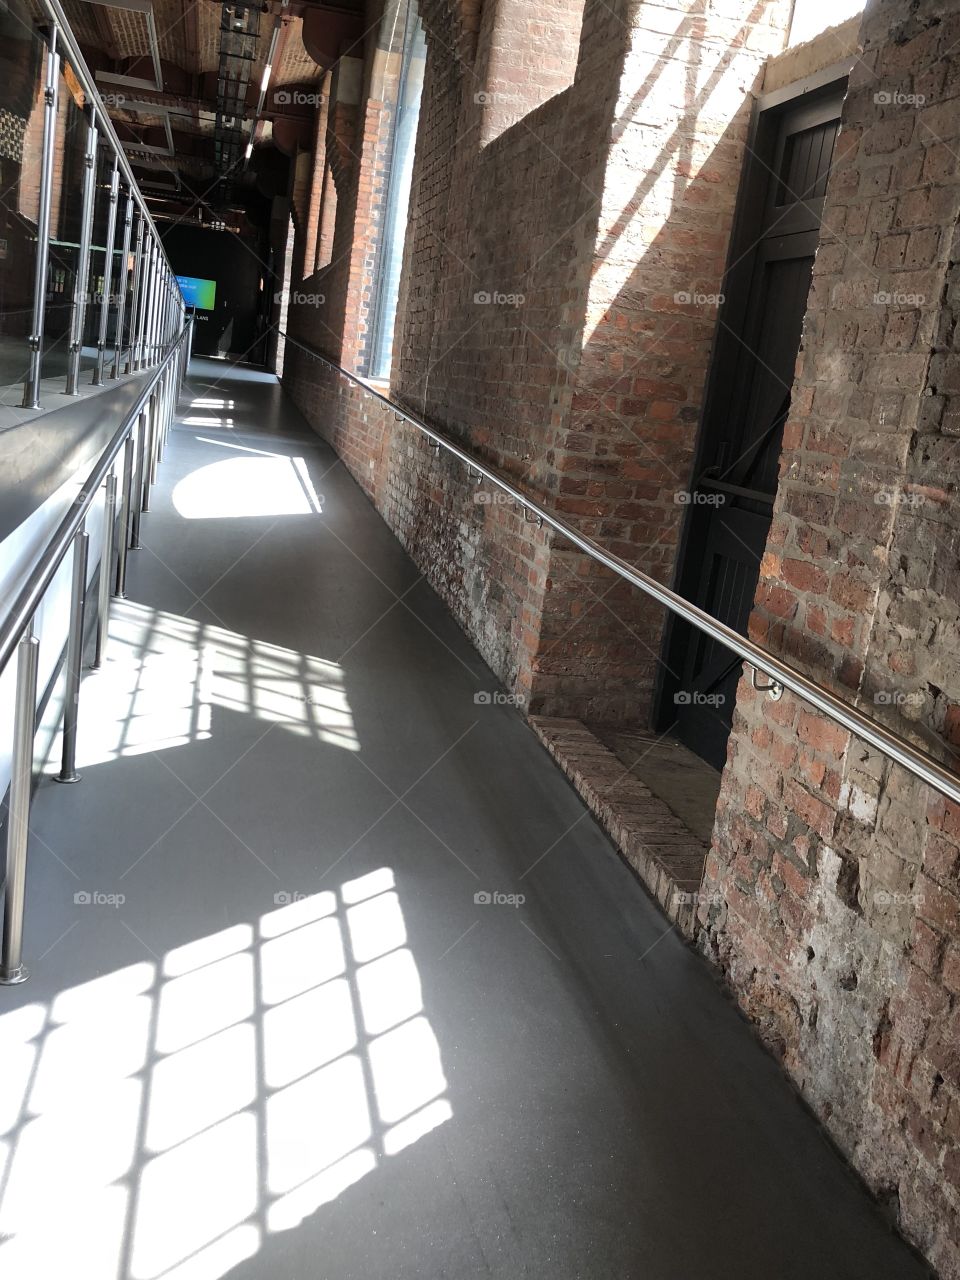 Brick glass and metal walkway